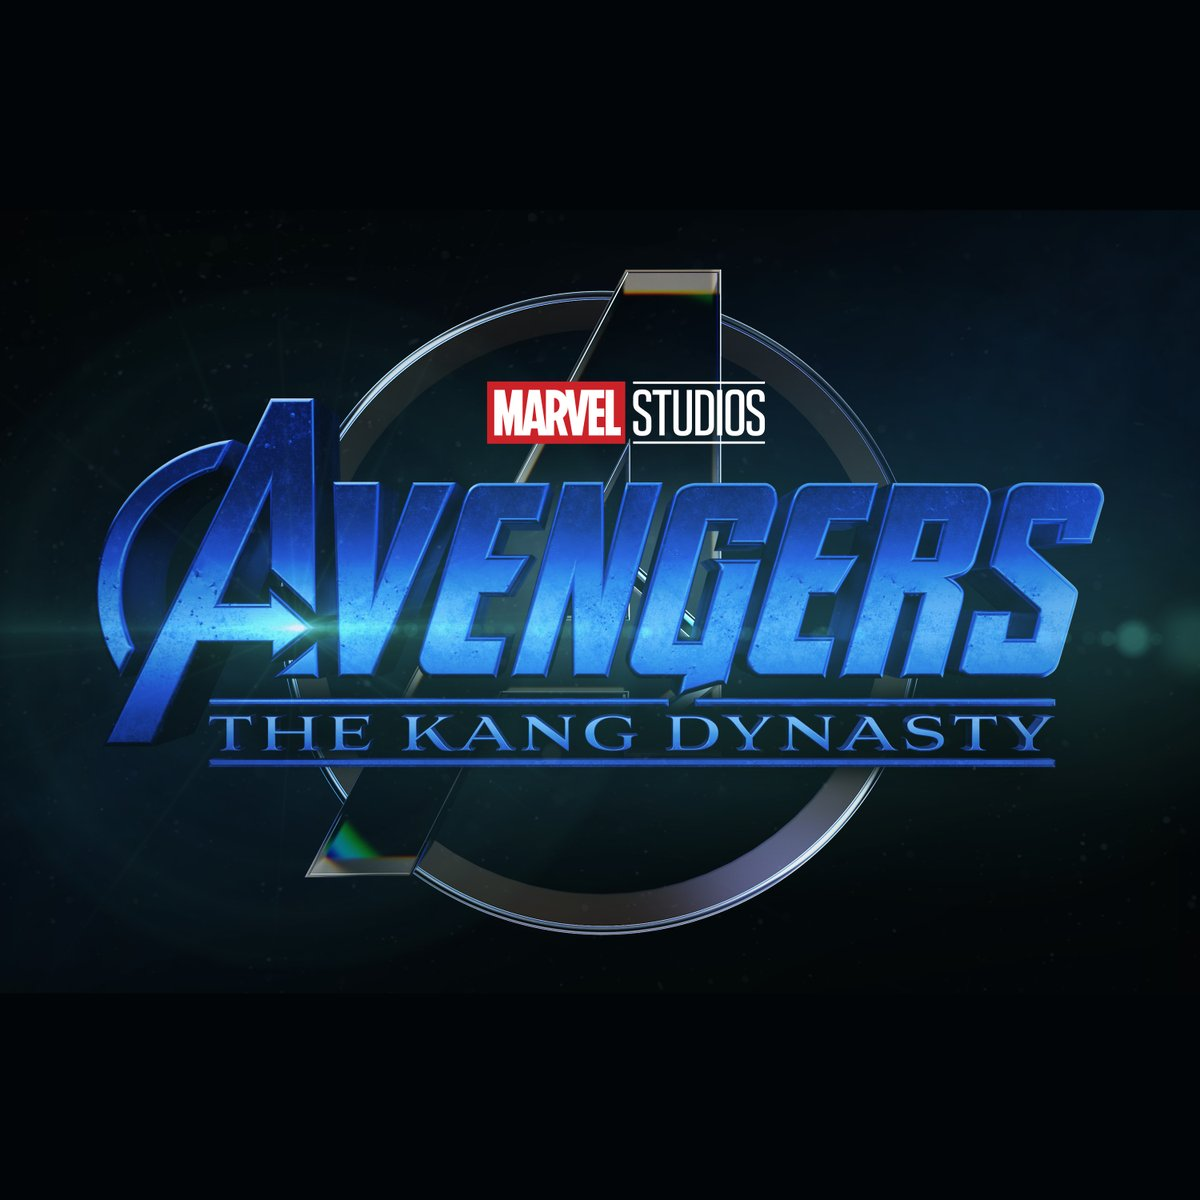 The logo for Avengers: The Kang Dynasty